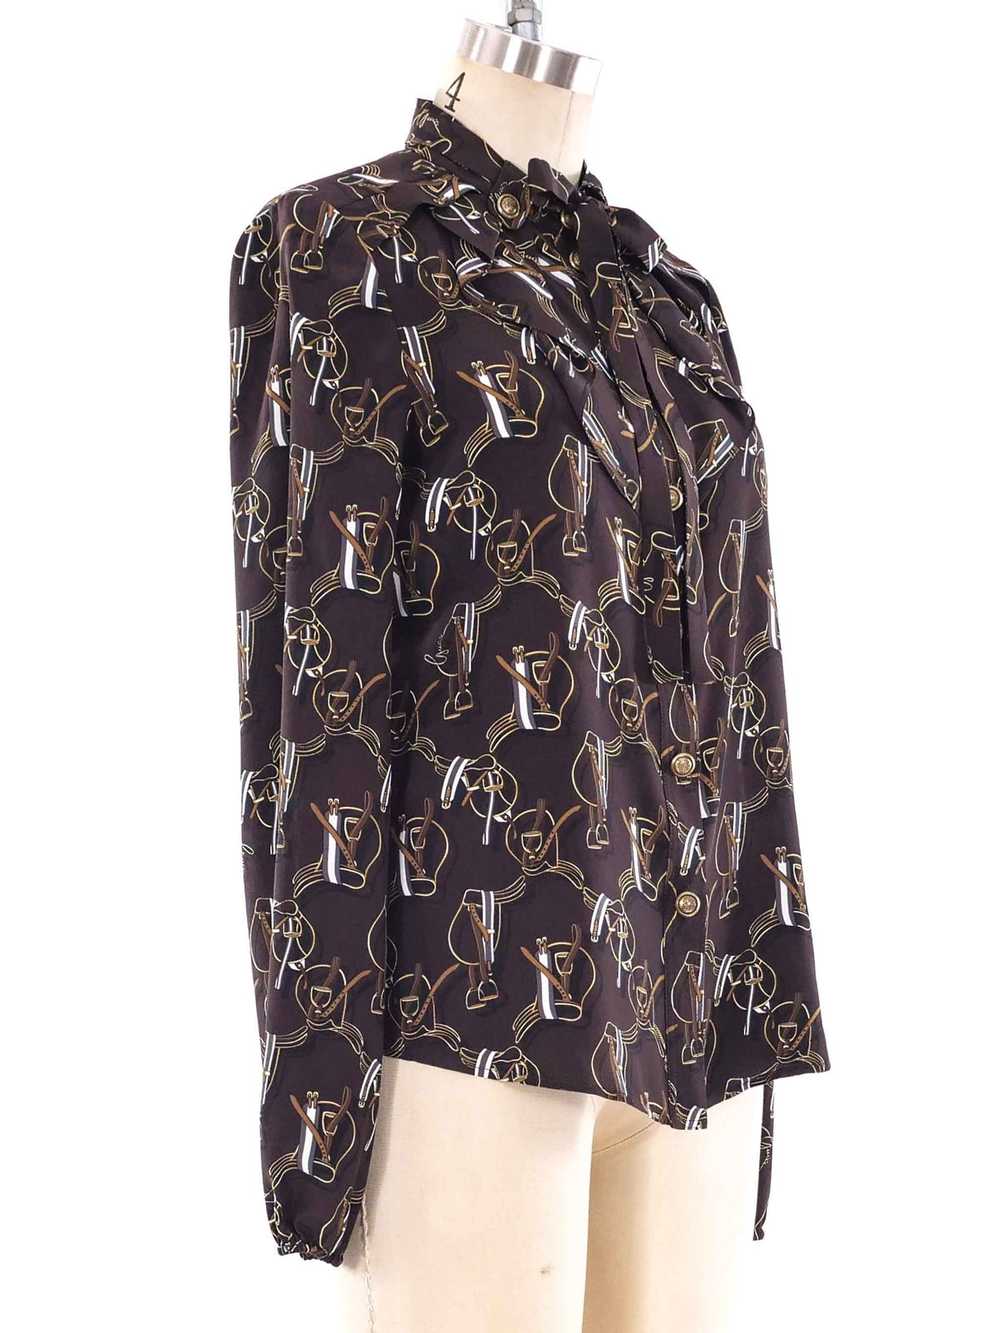 Gucci Equestrian Printed Silk Blouse - image 4